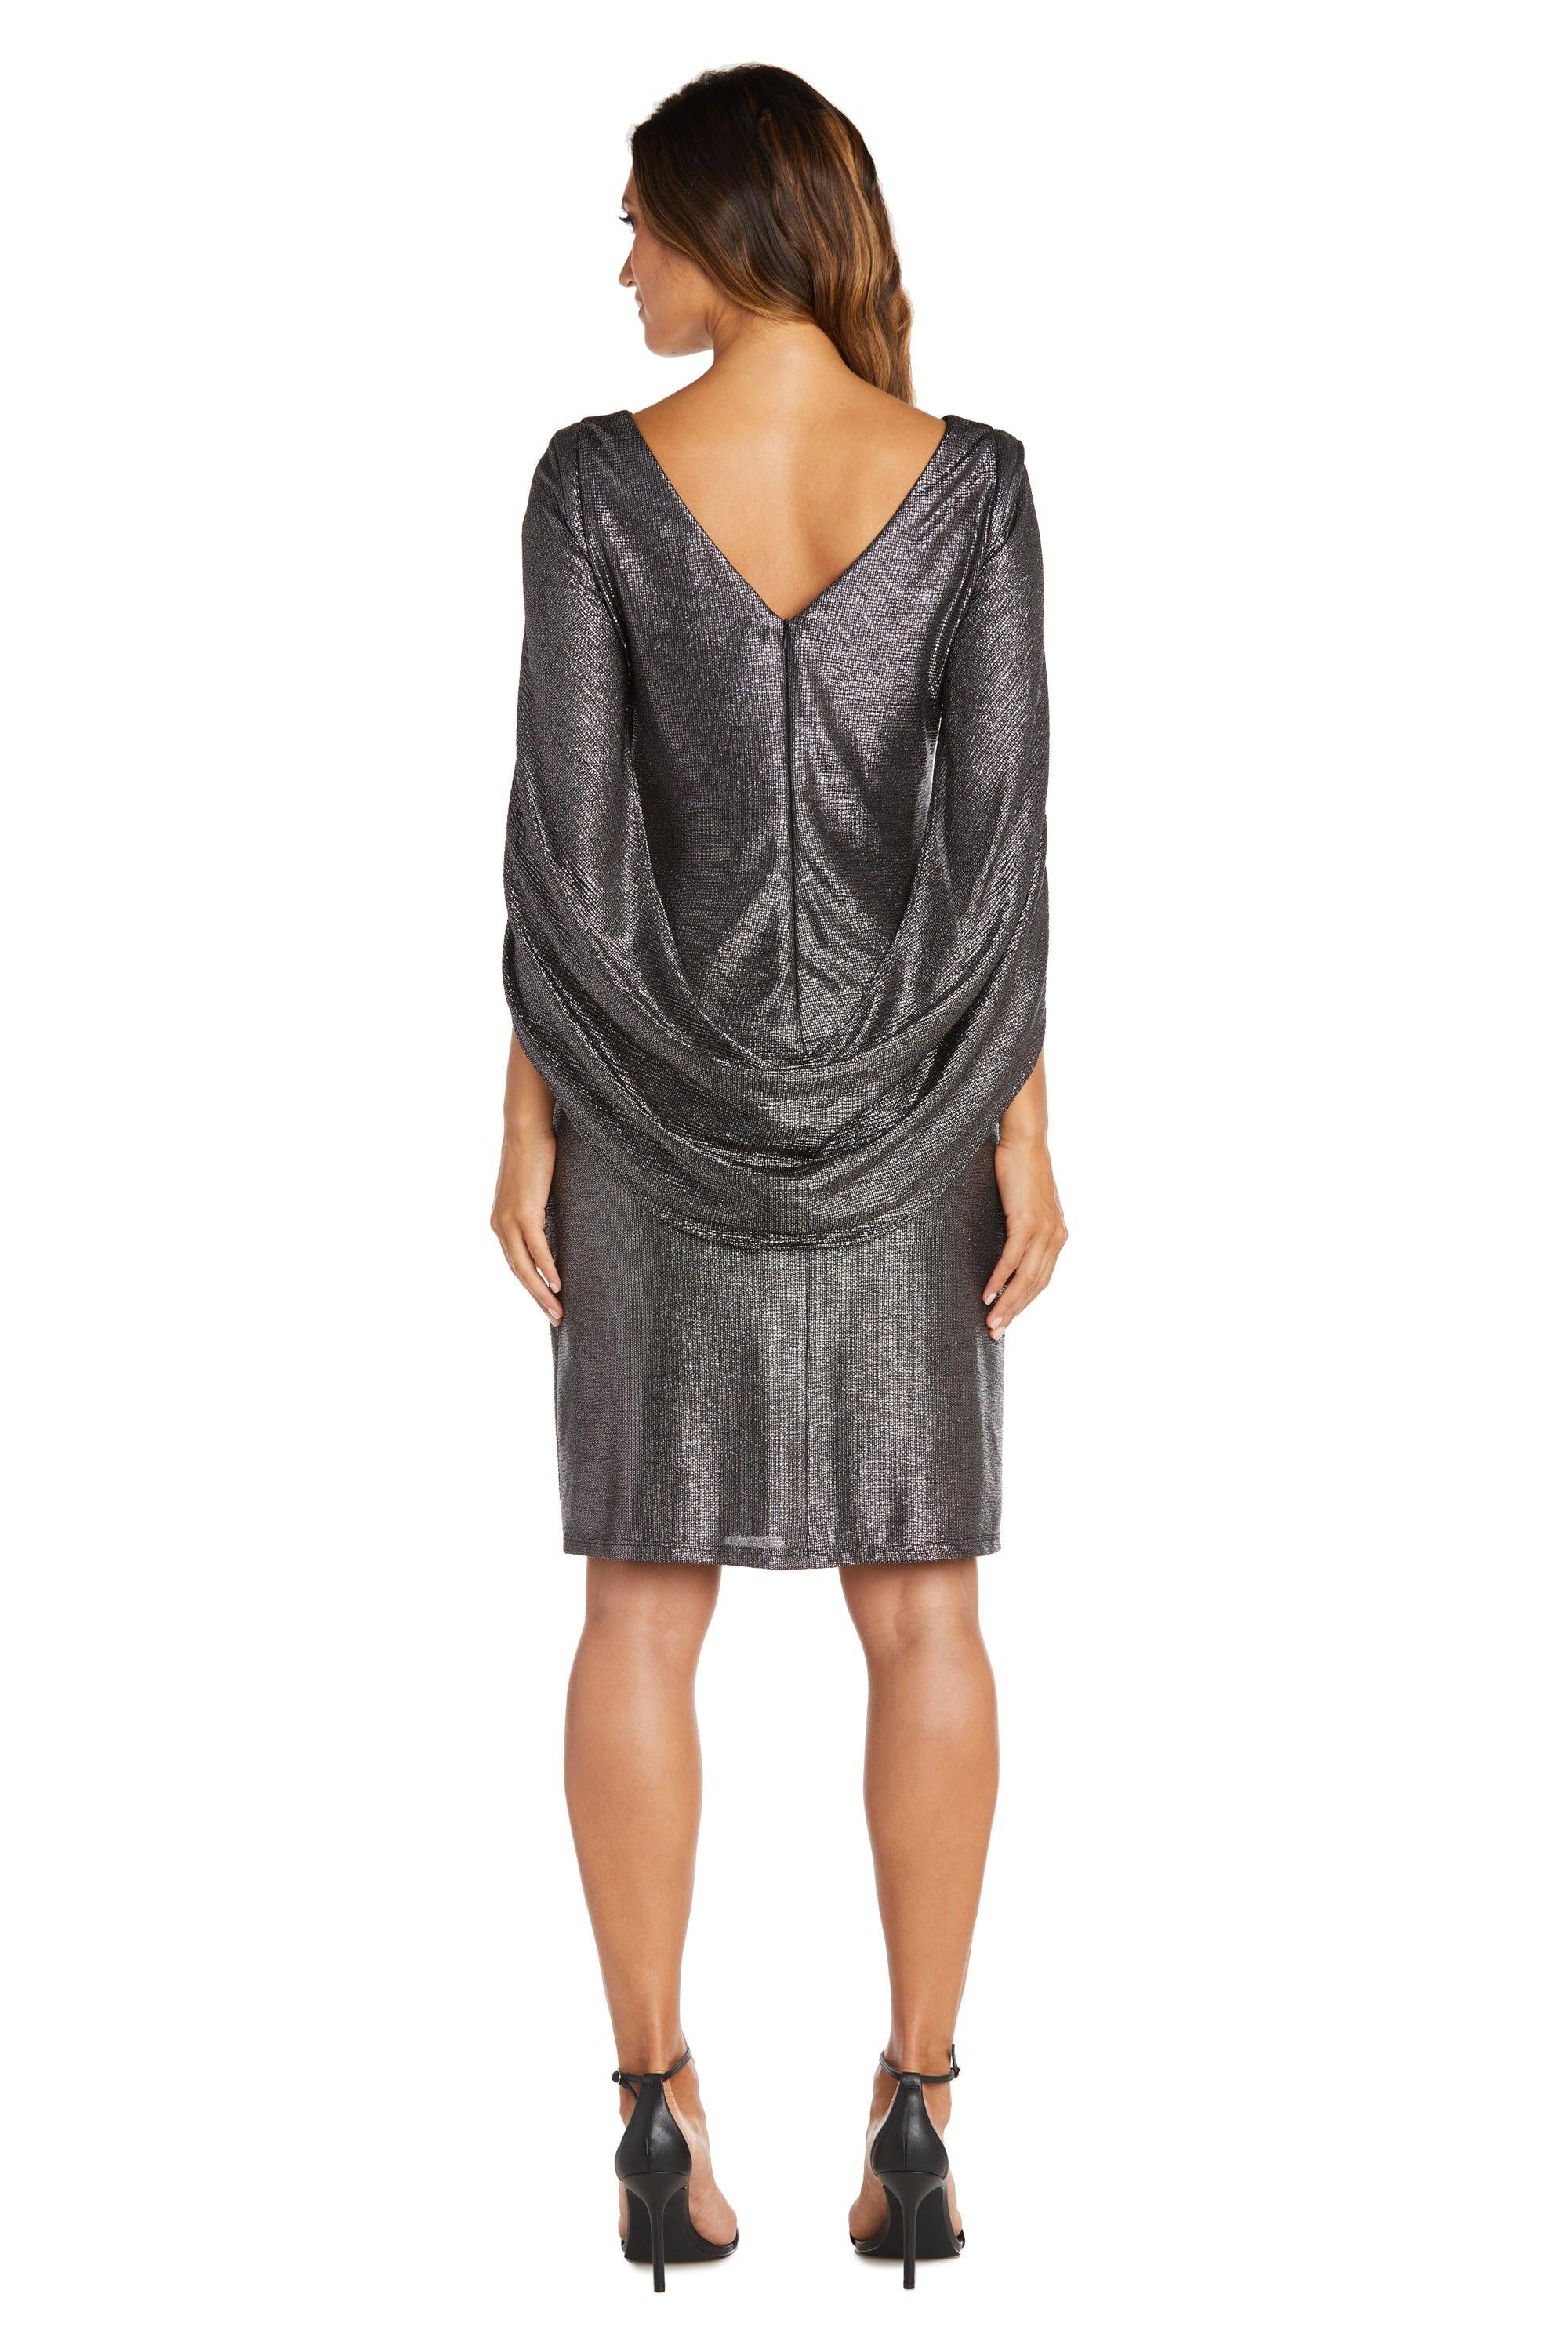 R&M Richards 7441 Draped Sleeve Short Dress | The Dress Outlet